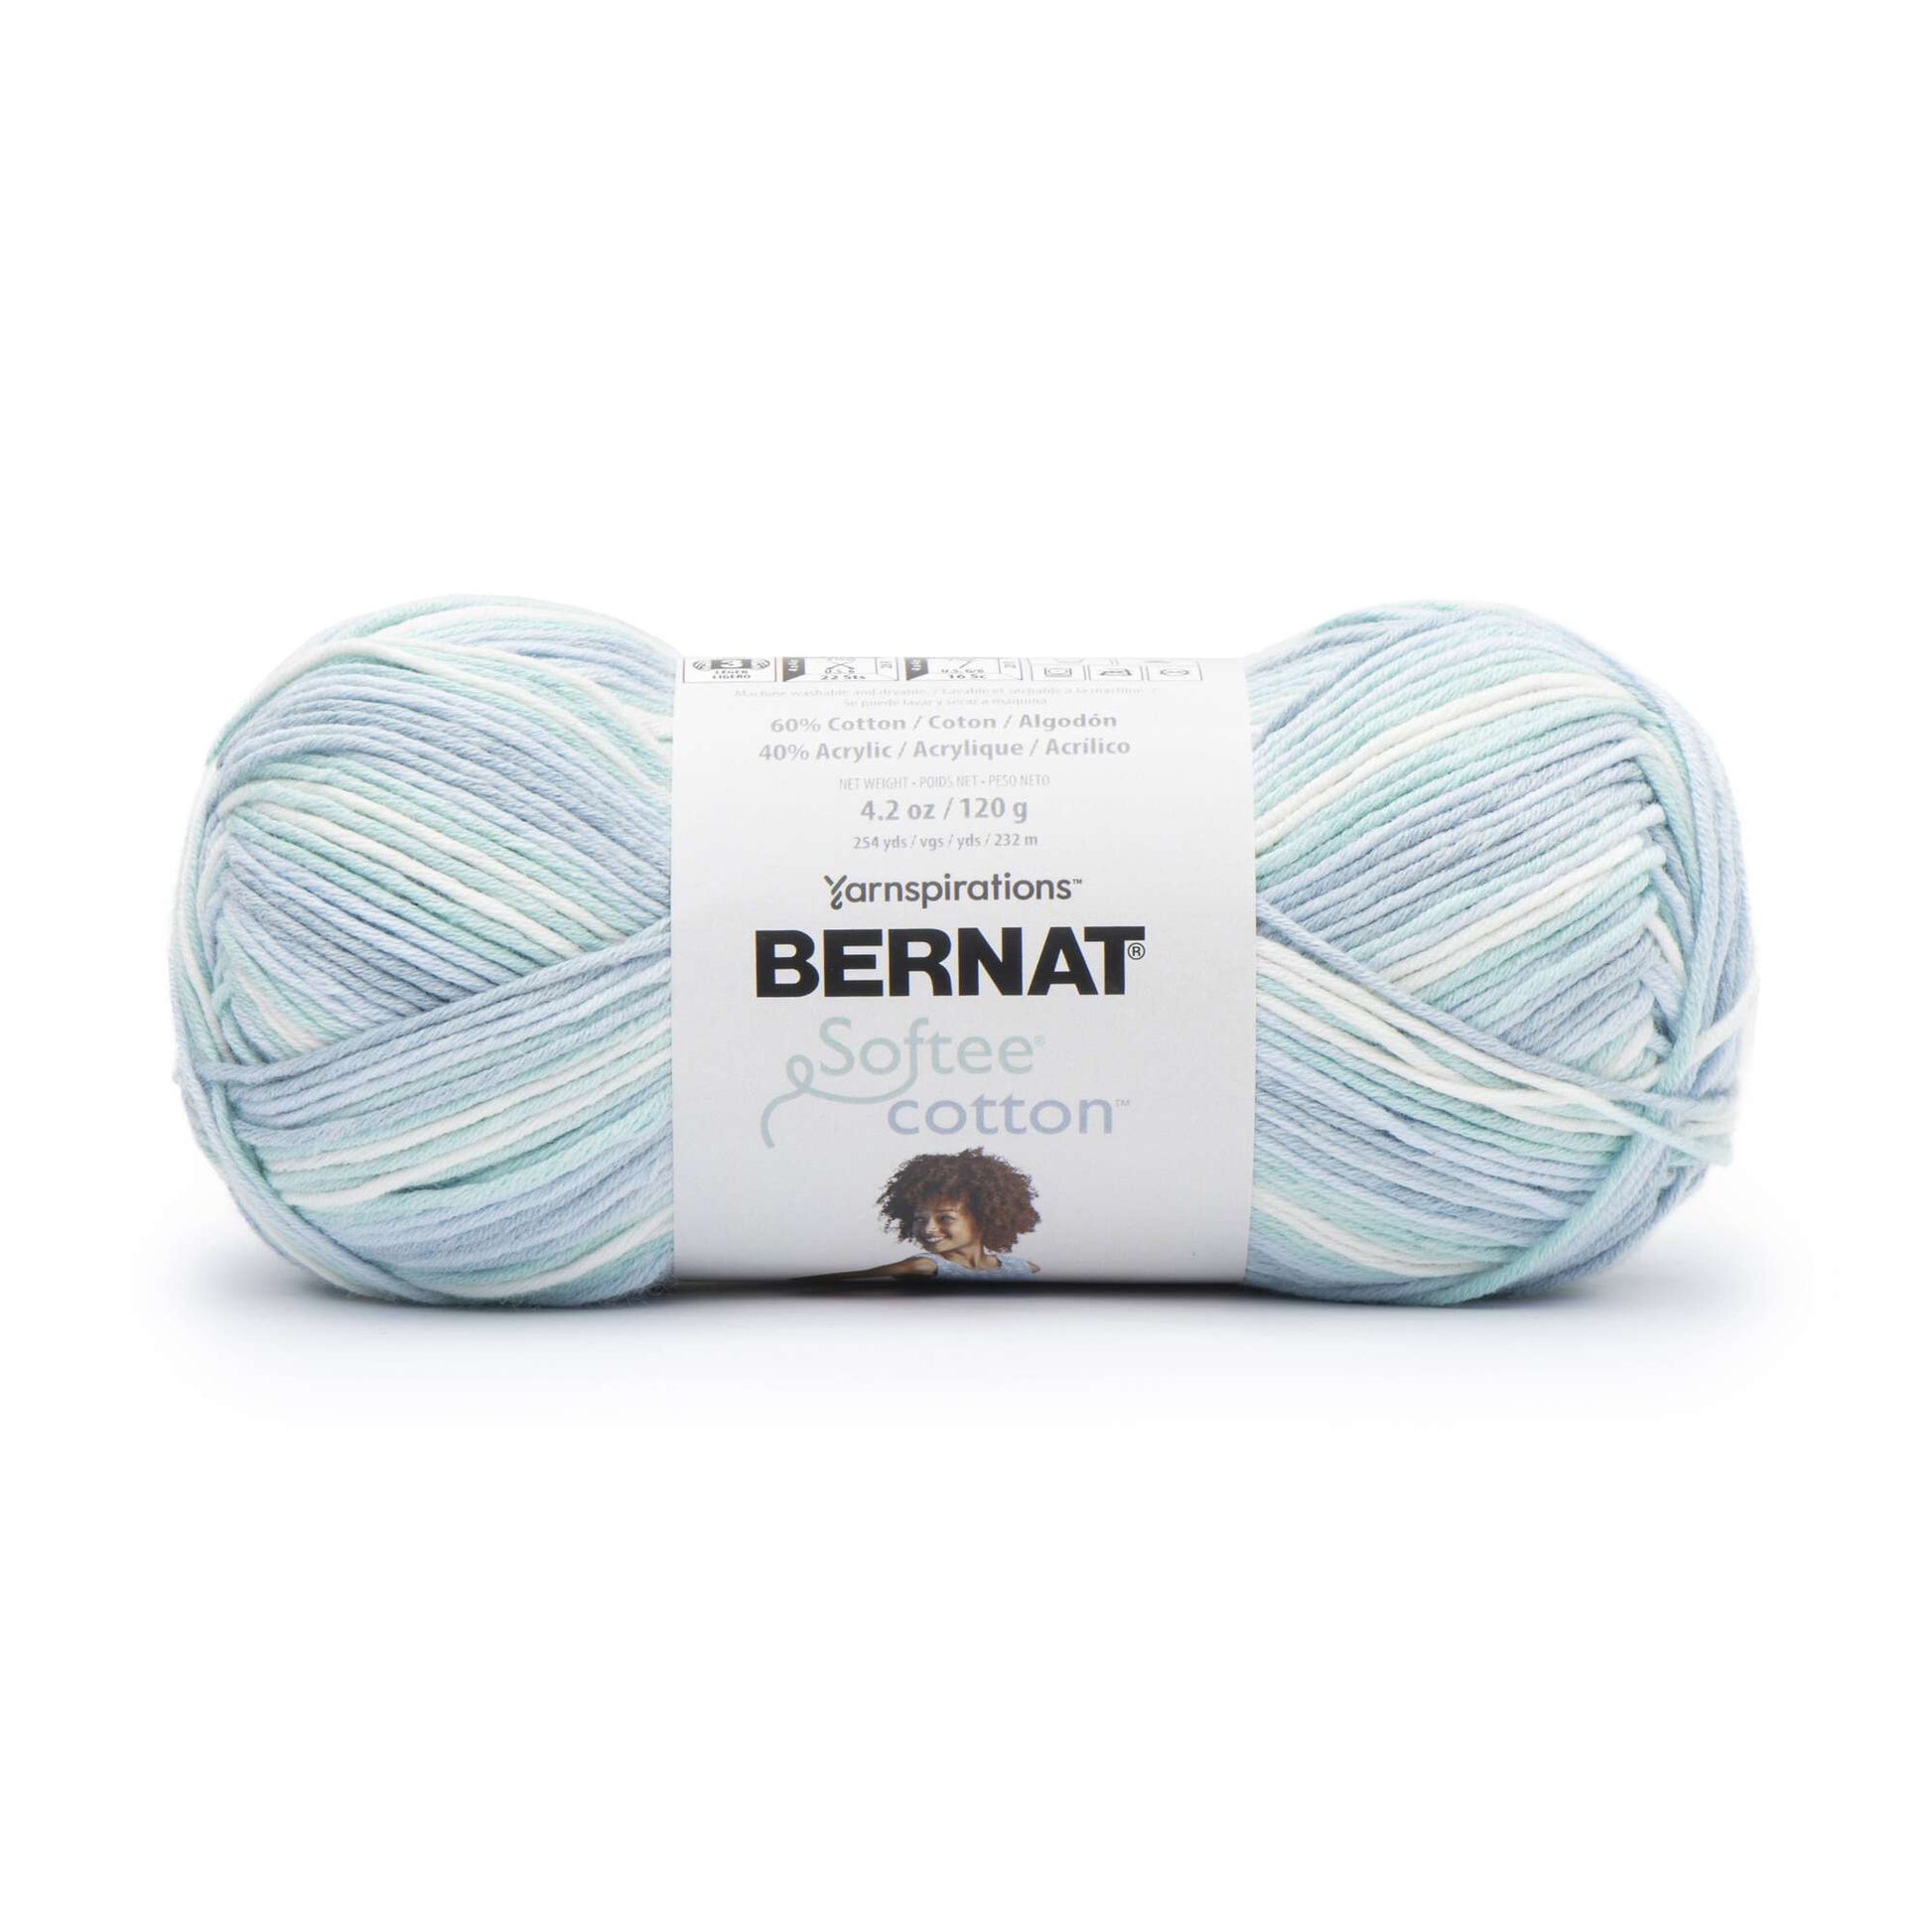 Quick Yarn Review - Bernat Softee Cotton 